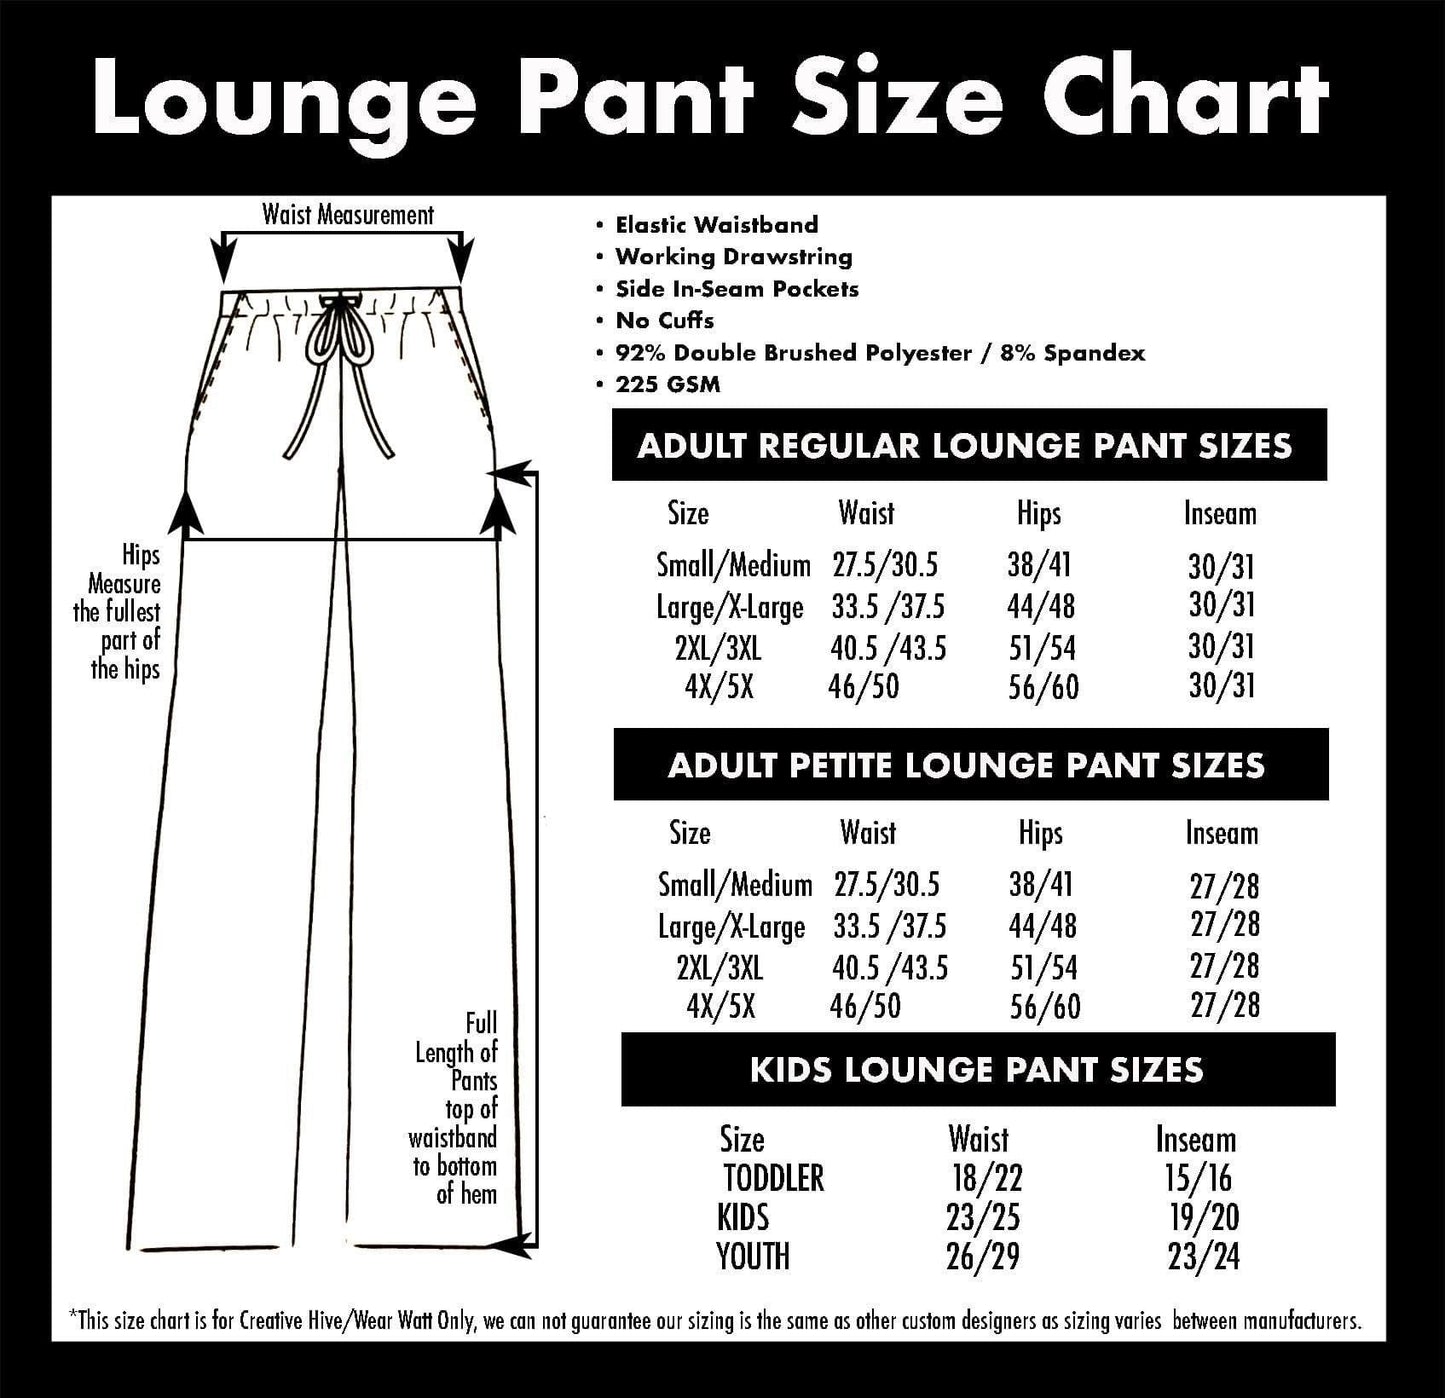 Sunflower Black & White Lounge Pants